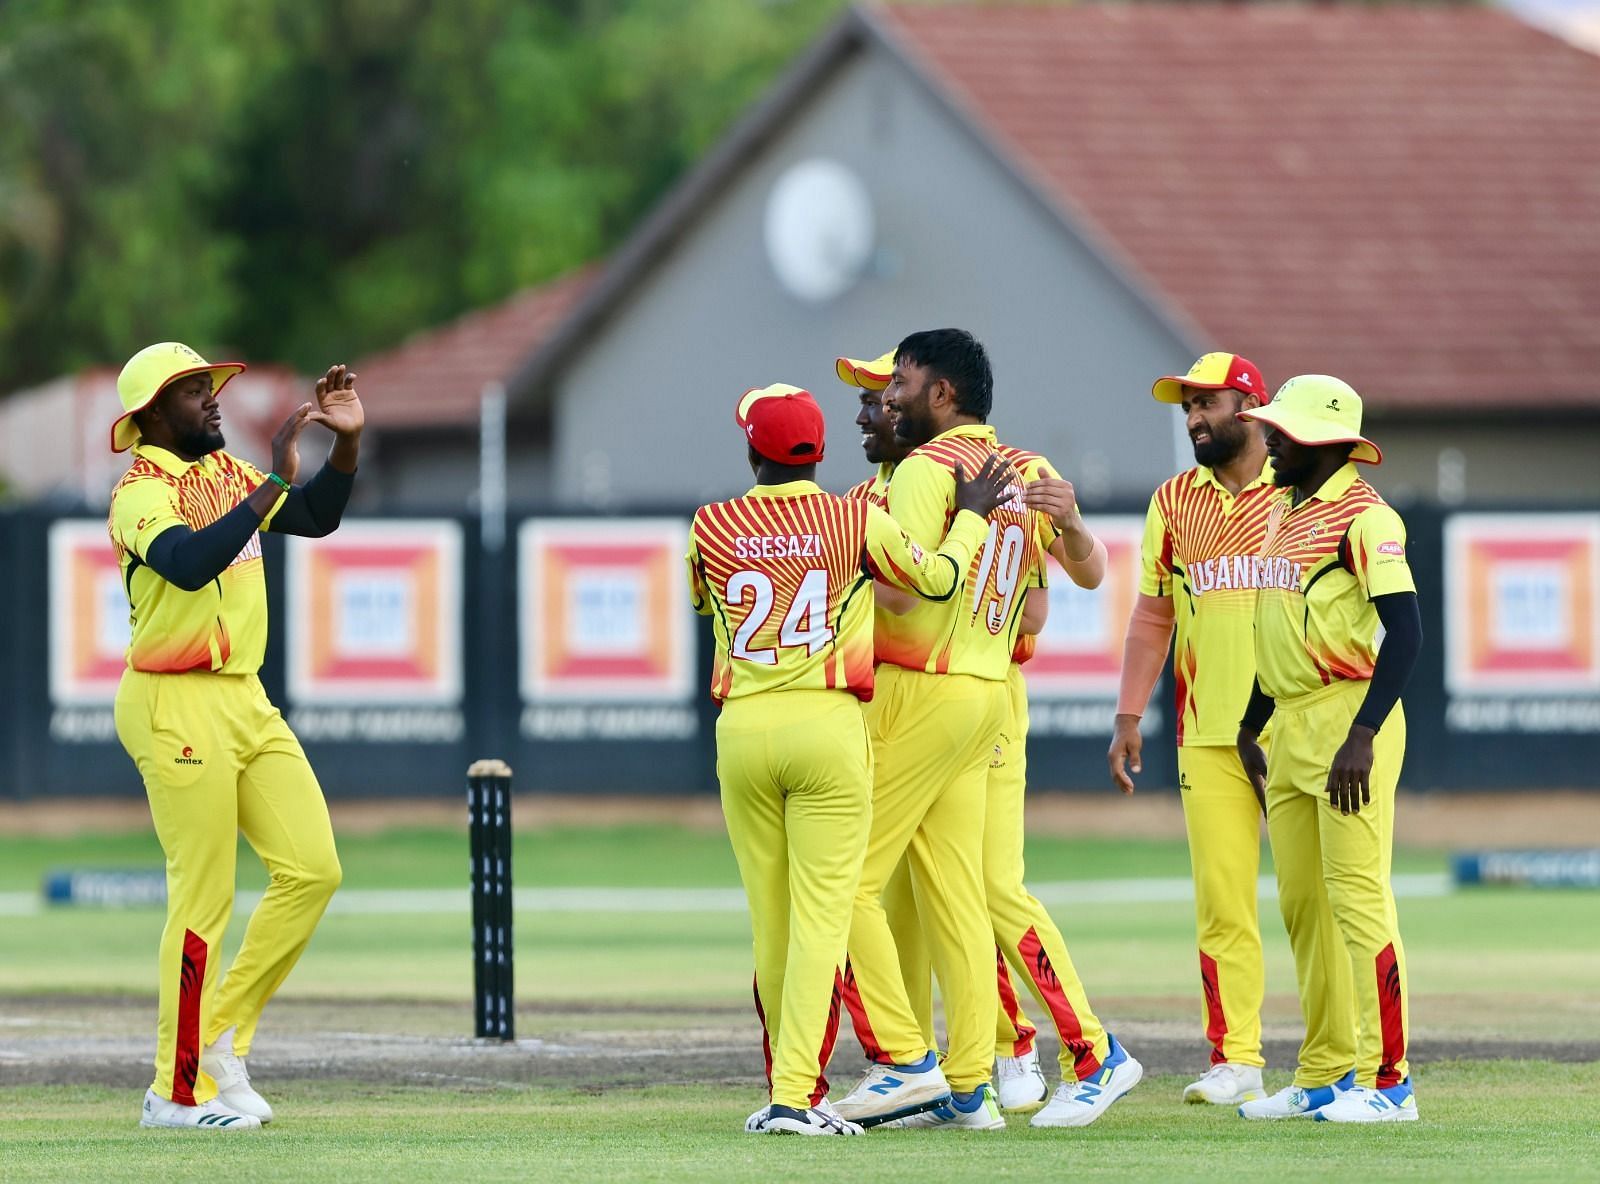 Uganda team in action. (Photo Credits: Uganda Cricketers Association)